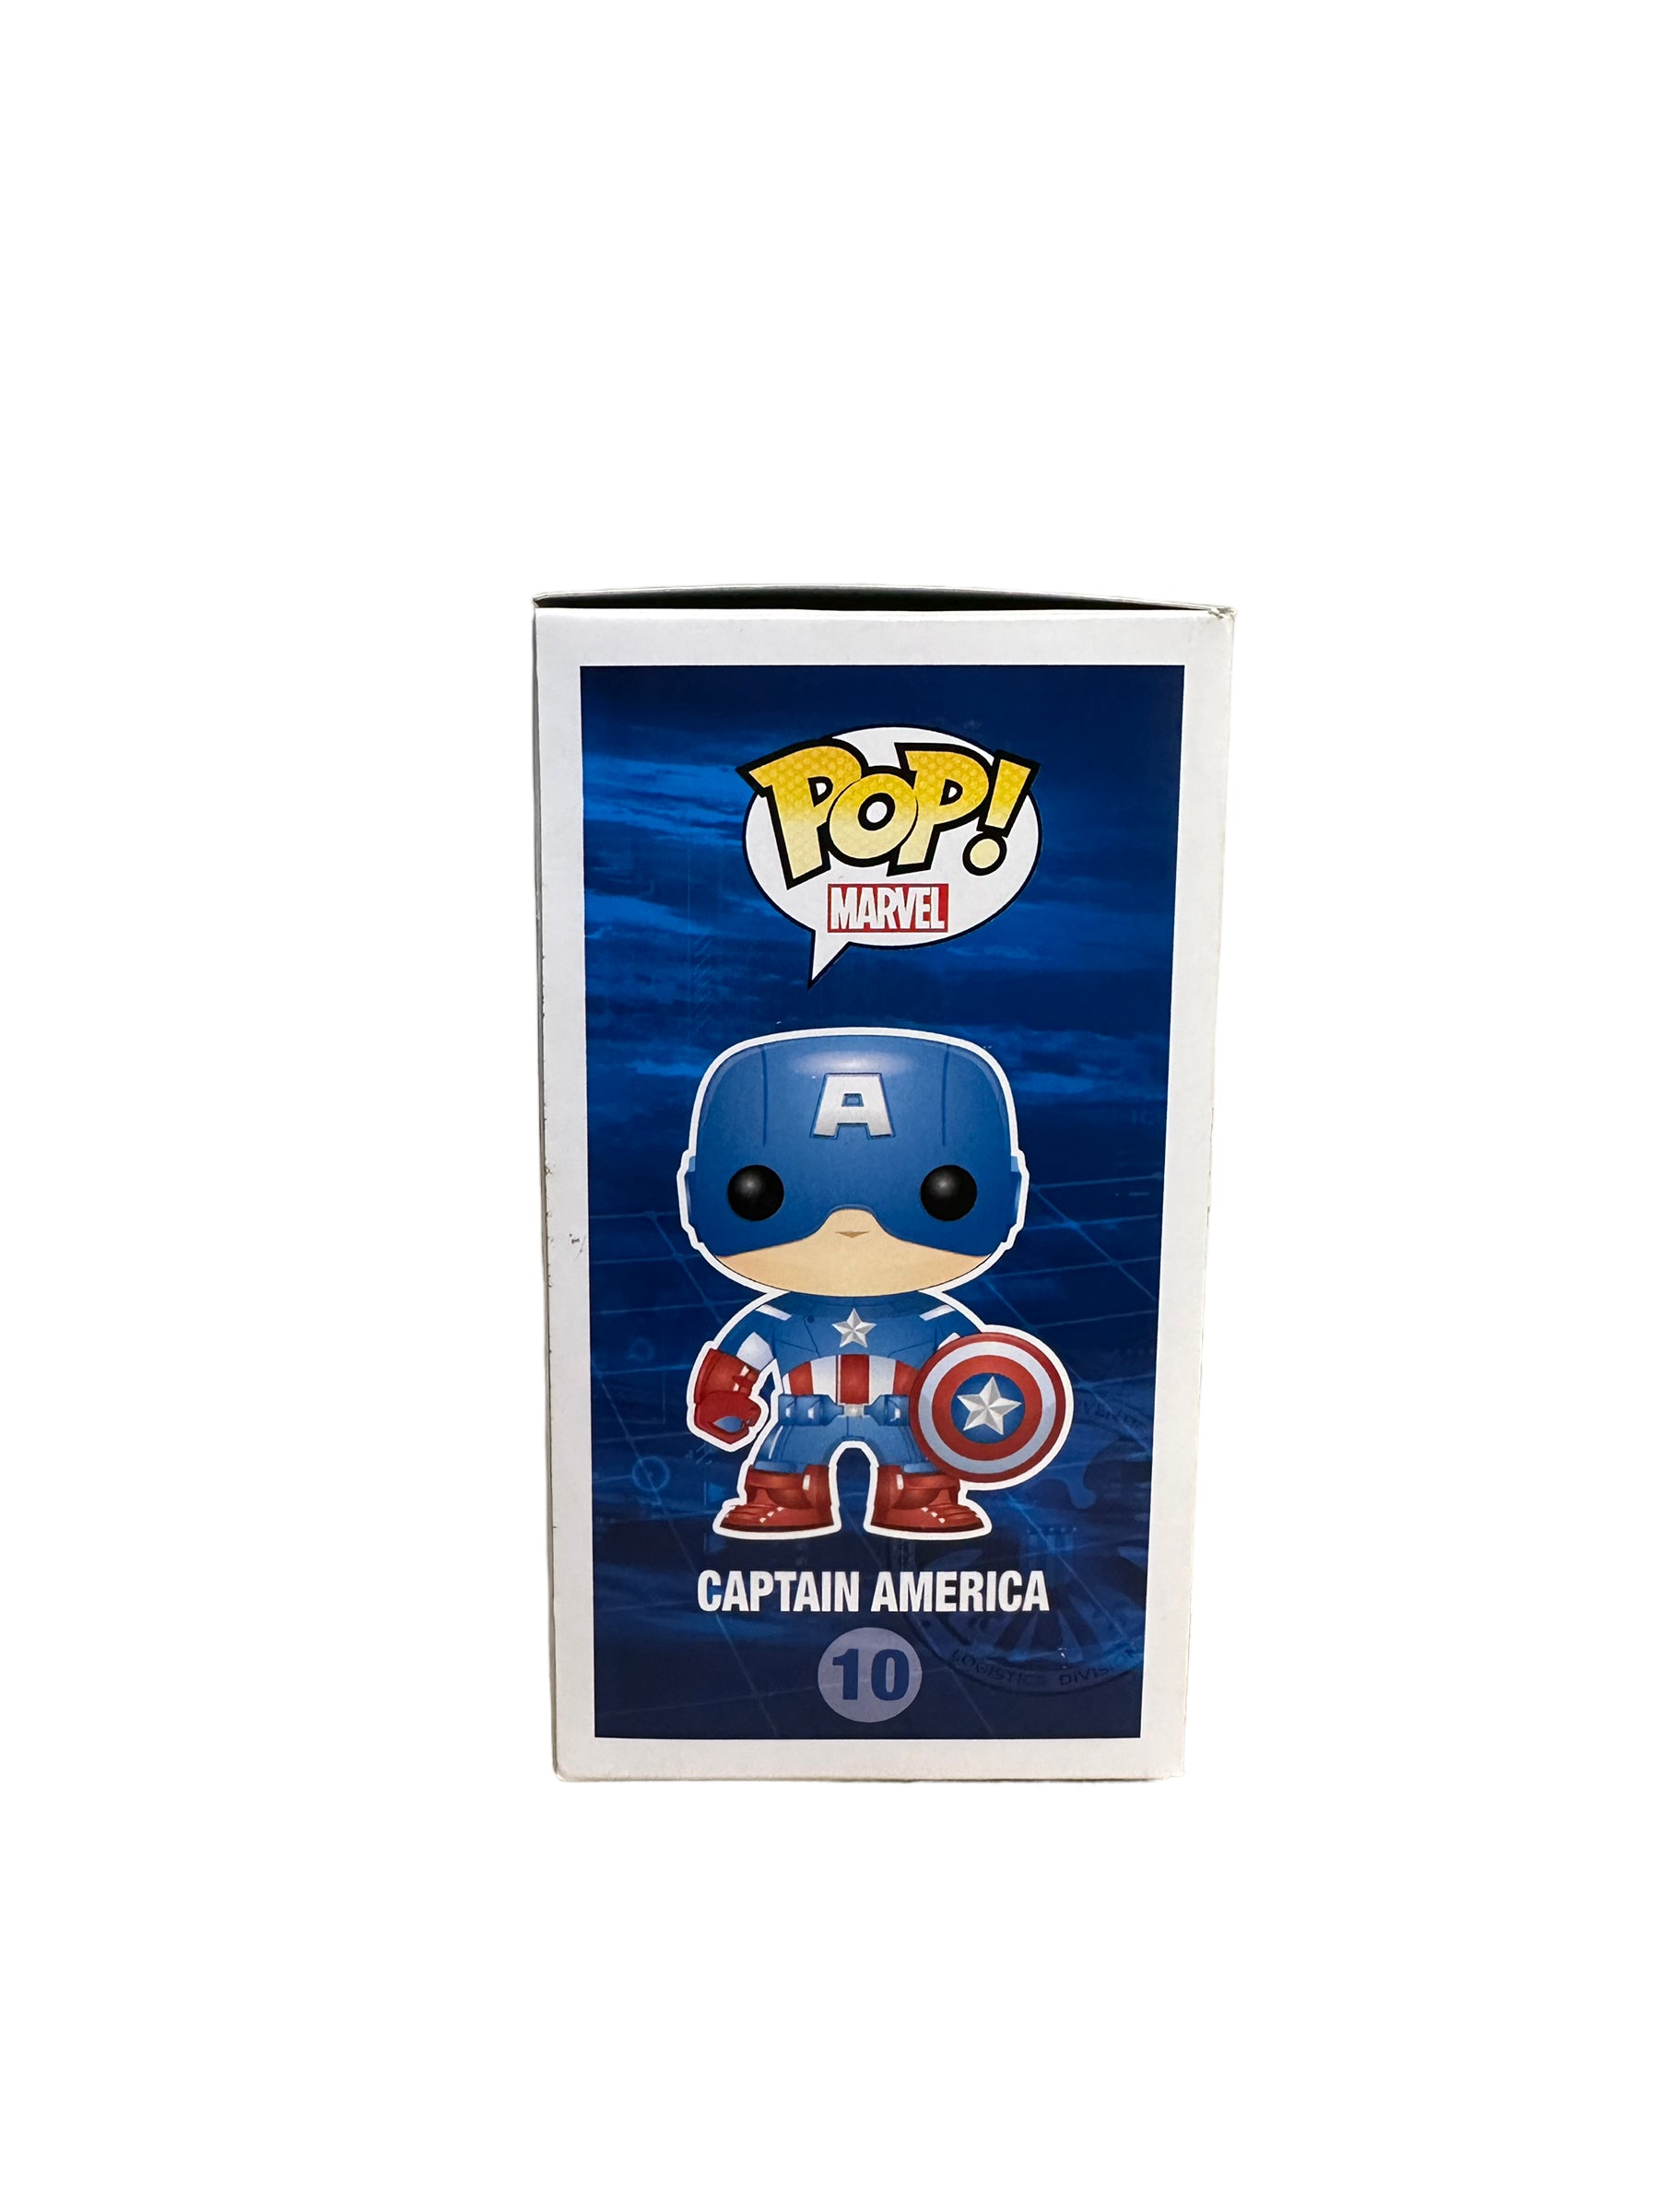 Captain America #10 (Vinyl Bobble-Head) Funko Pop! - The Avengers - 2012 Pop! - Condition 7.5/10